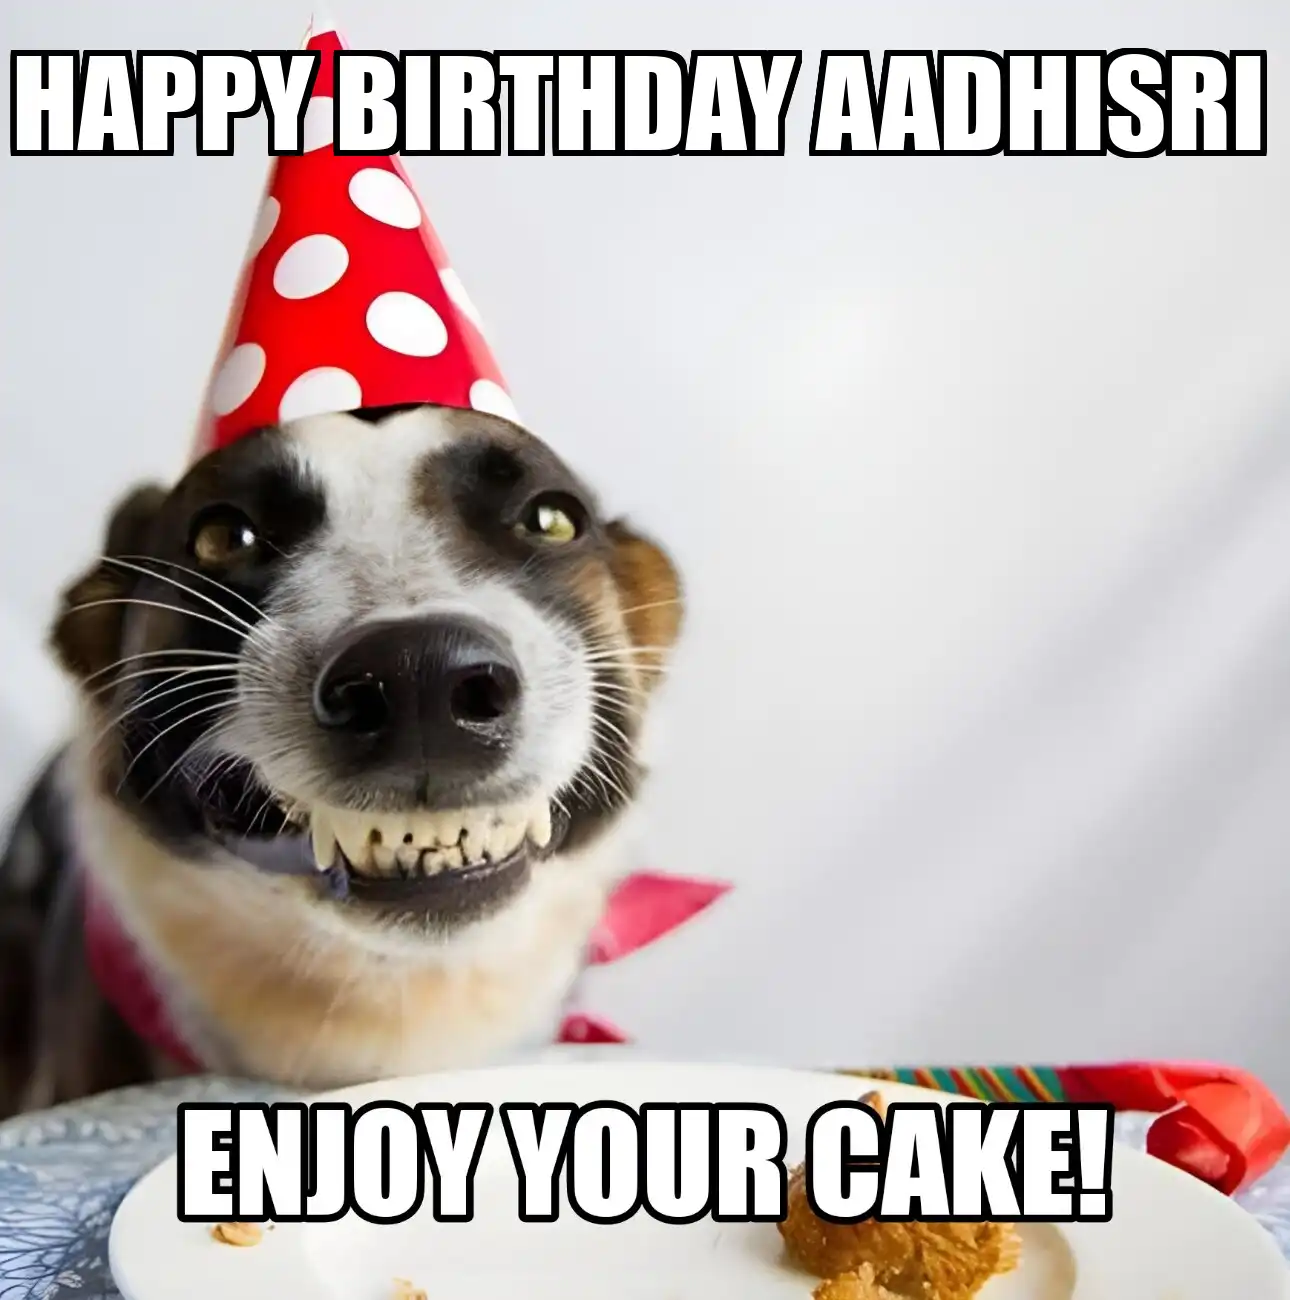 Happy Birthday Aadhisri Enjoy Your Cake Dog Meme